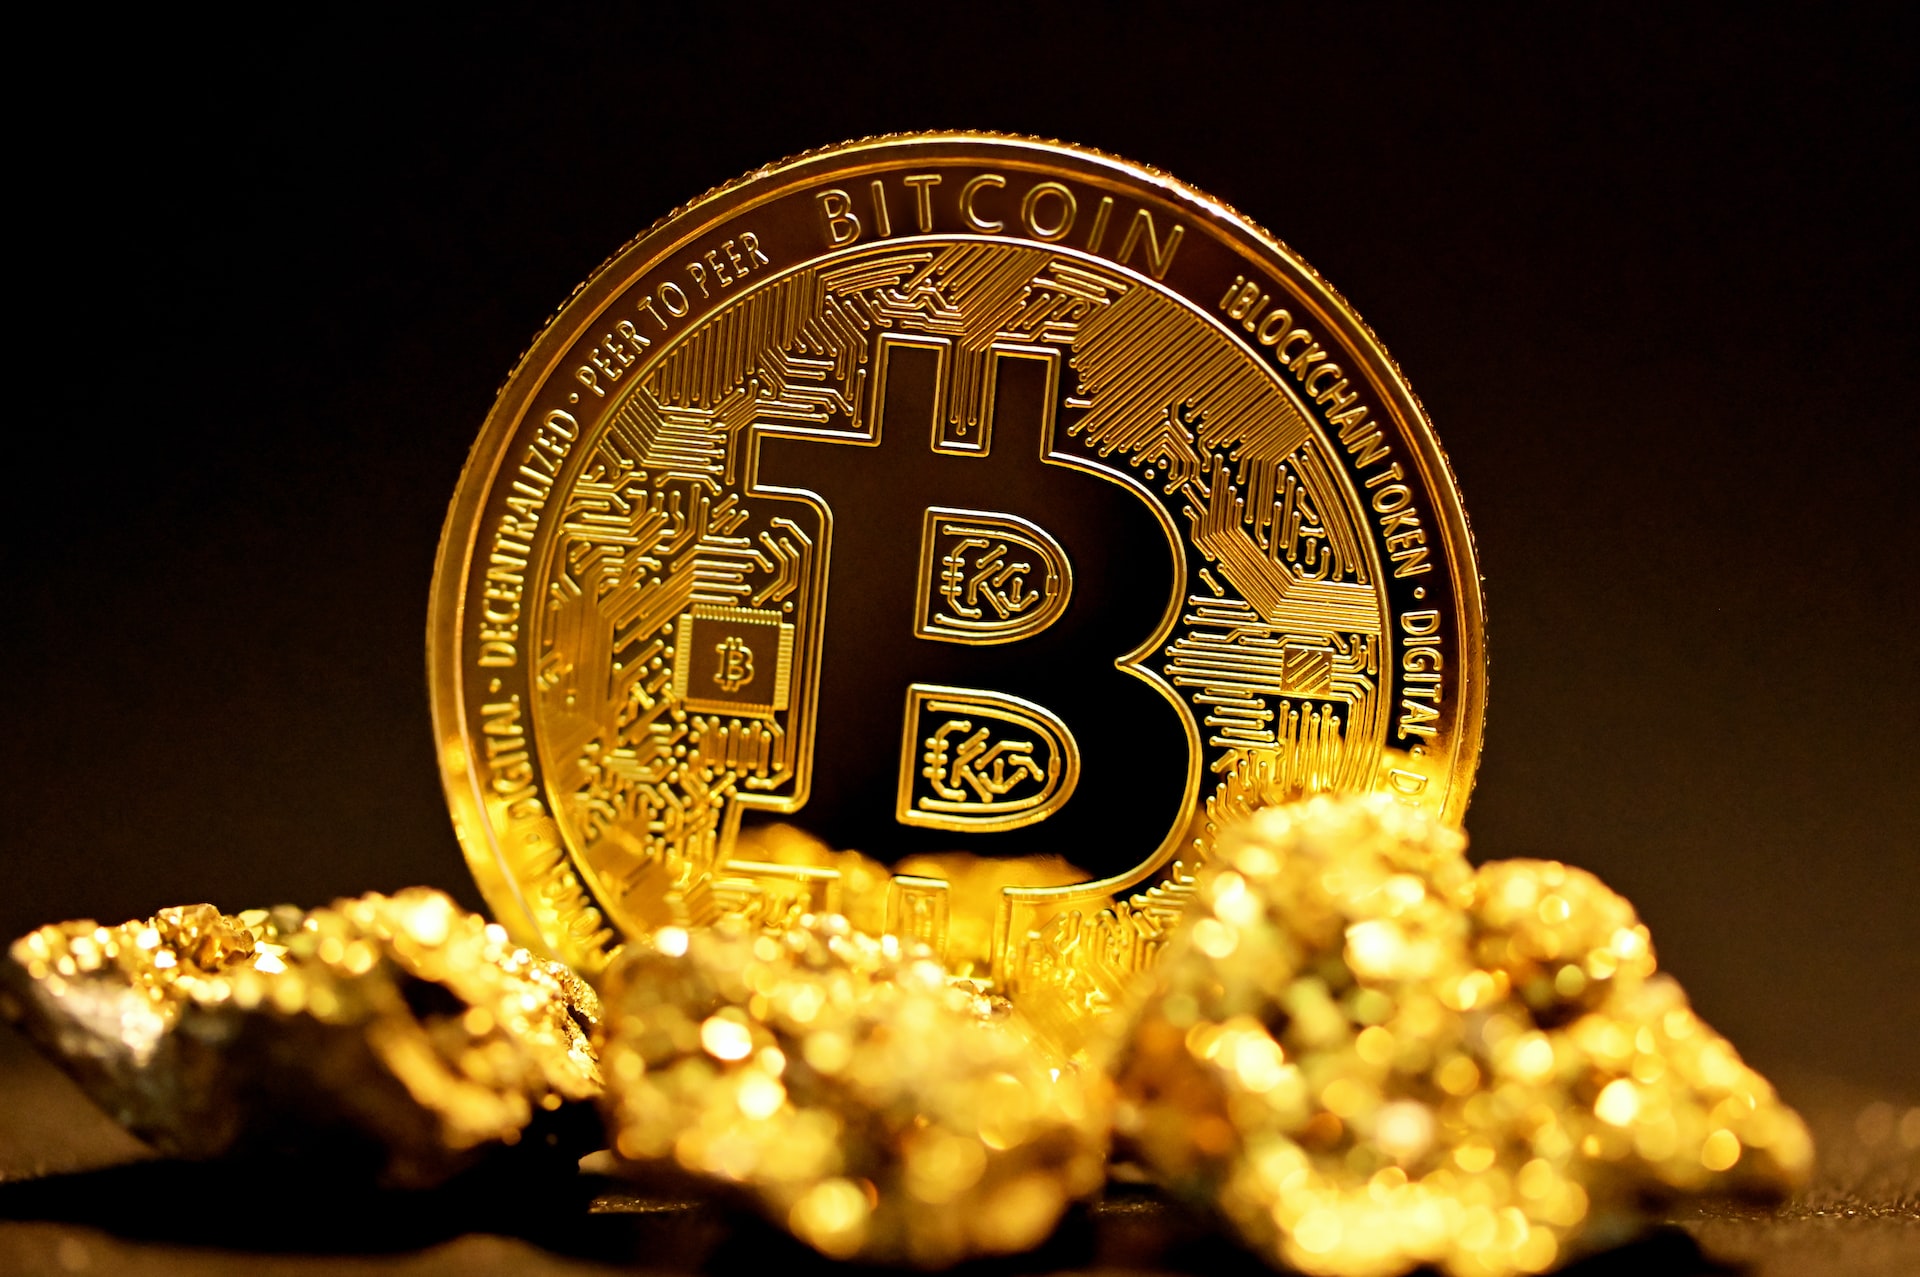 Sina-cism: Bitcoin may be as good as gold